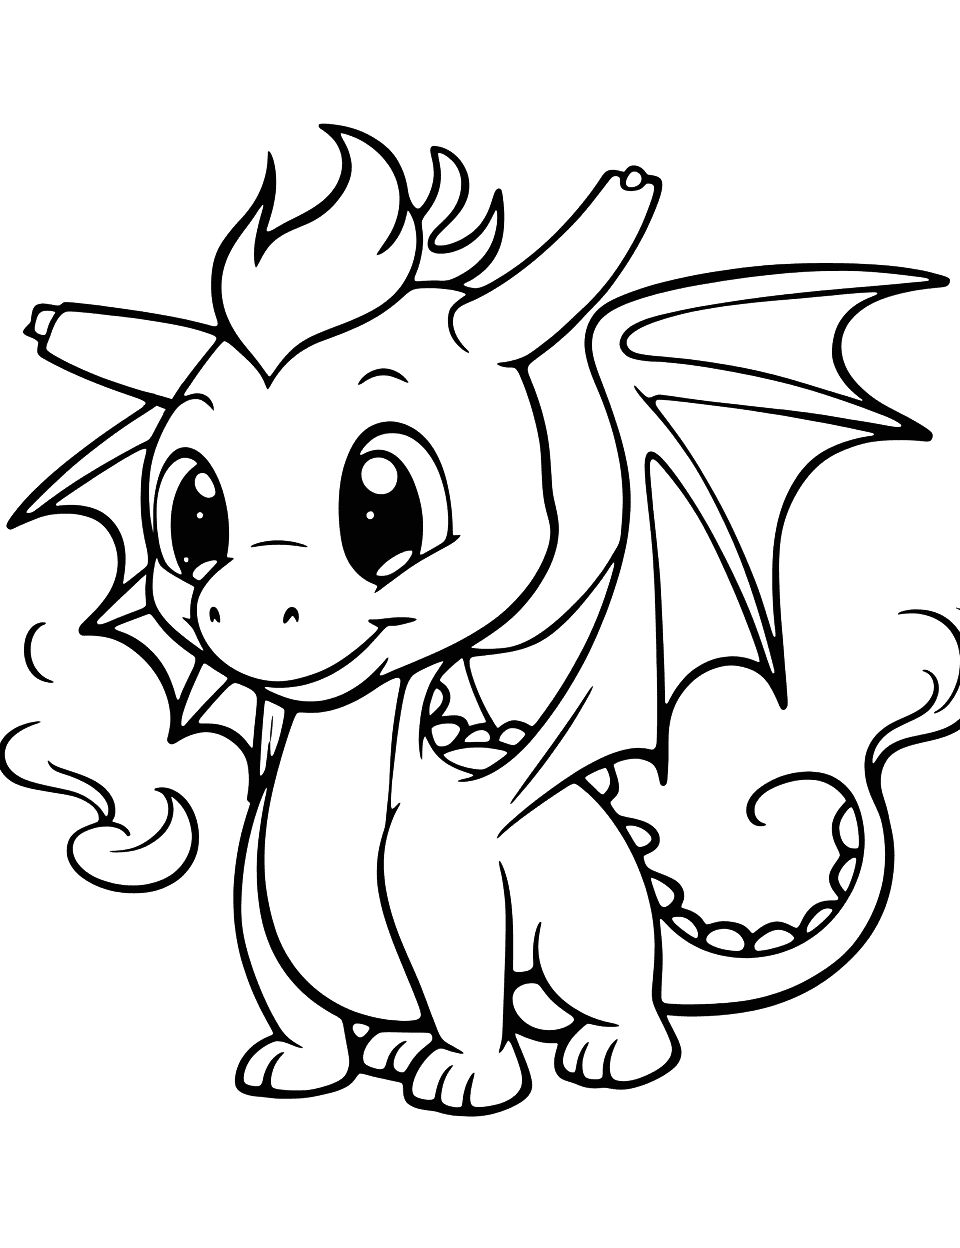 Chibi Dragon Coloring Page - A cute chibi-style dragon, blowing a puff of smoke.